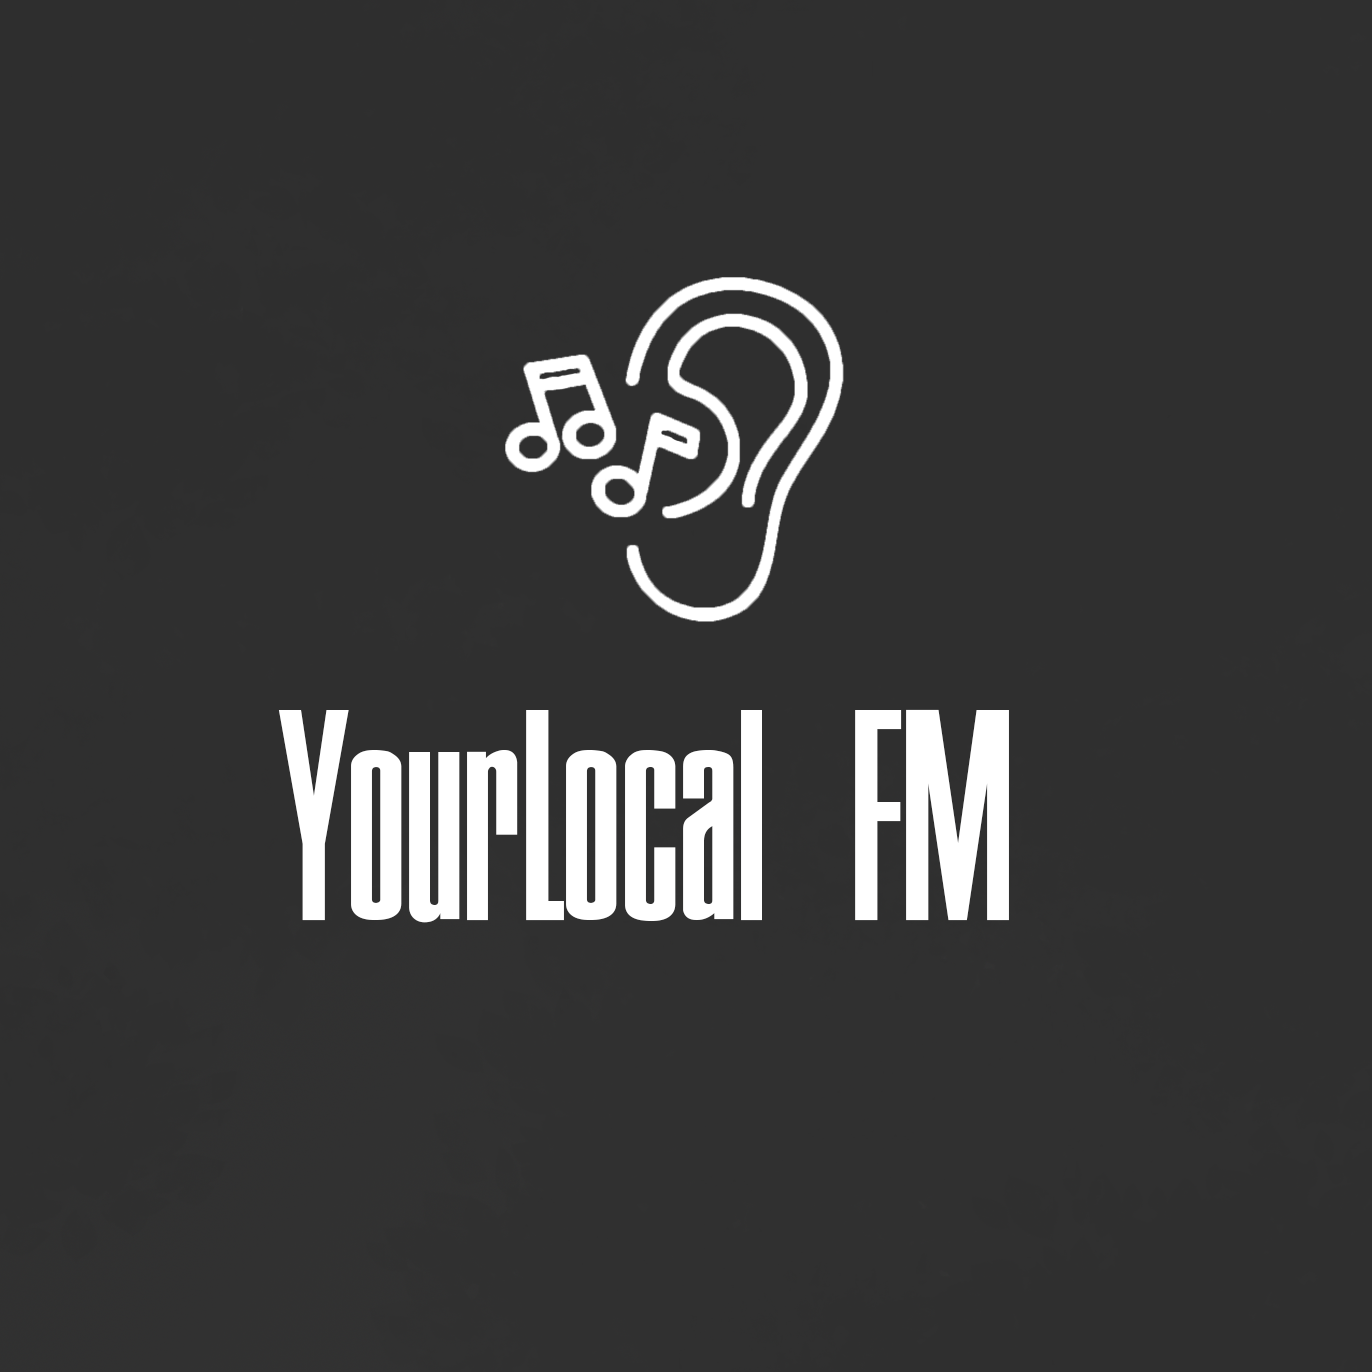 YourLocal FM